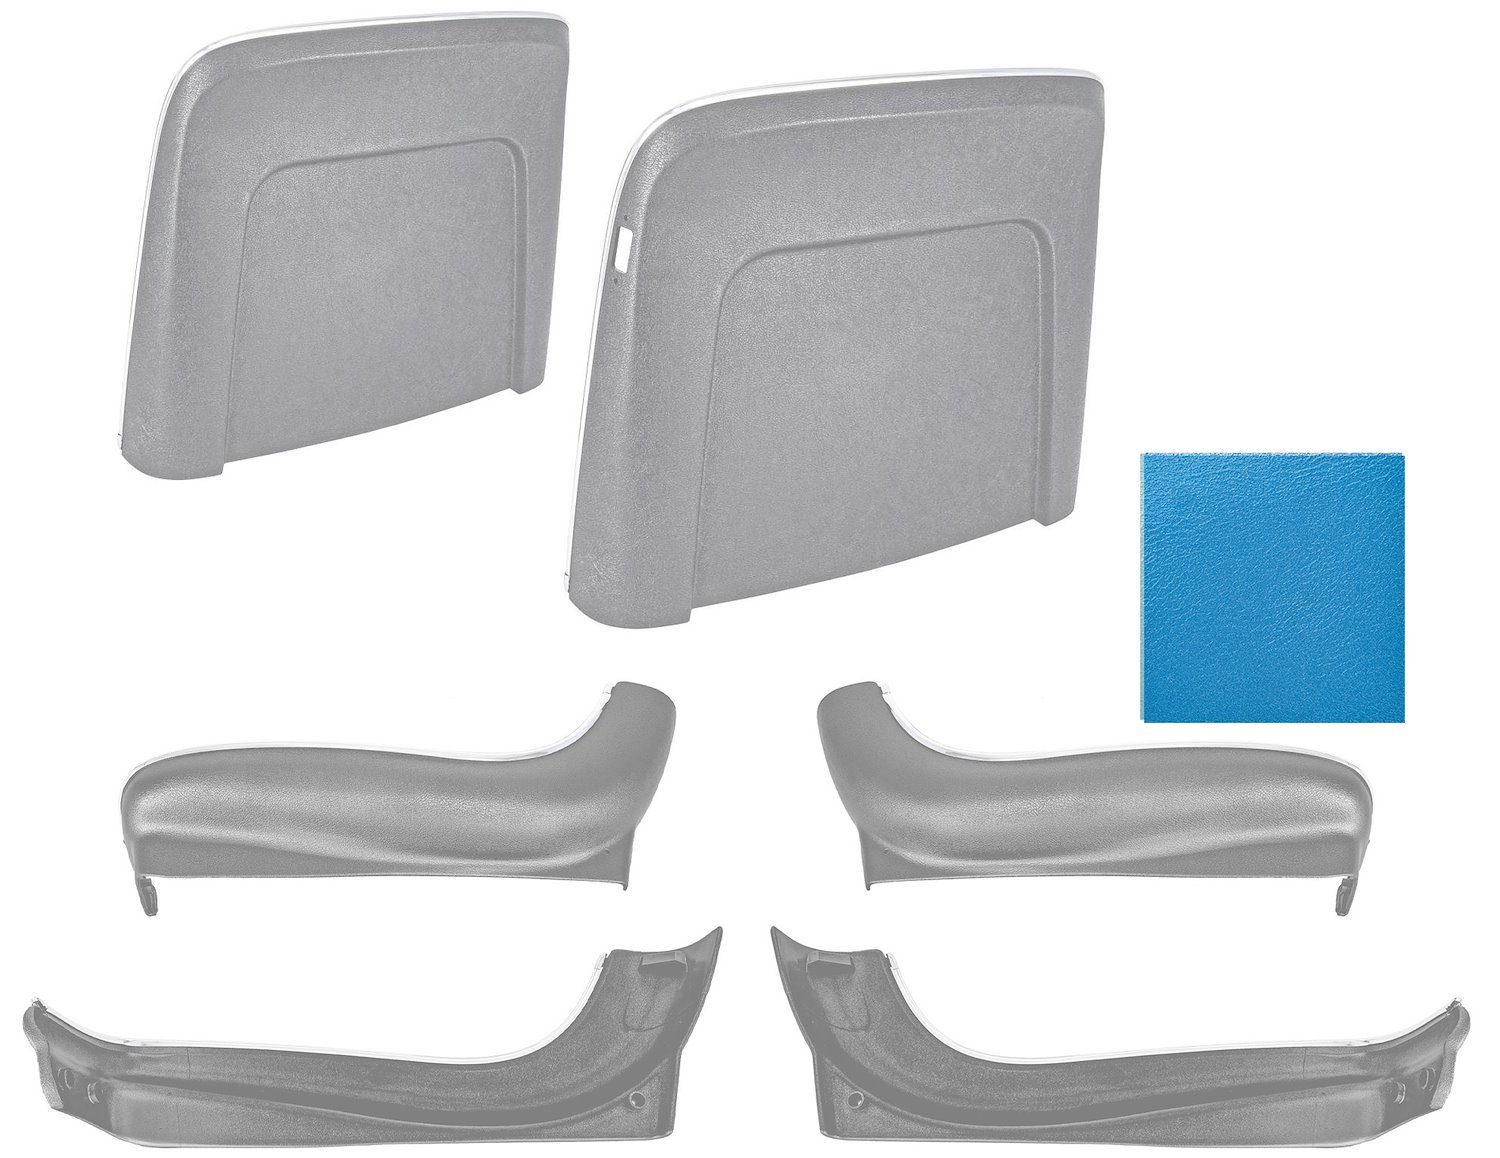 Seat Backs & Sides Kit Fits Select 1967 GM Models [Bright Blue]